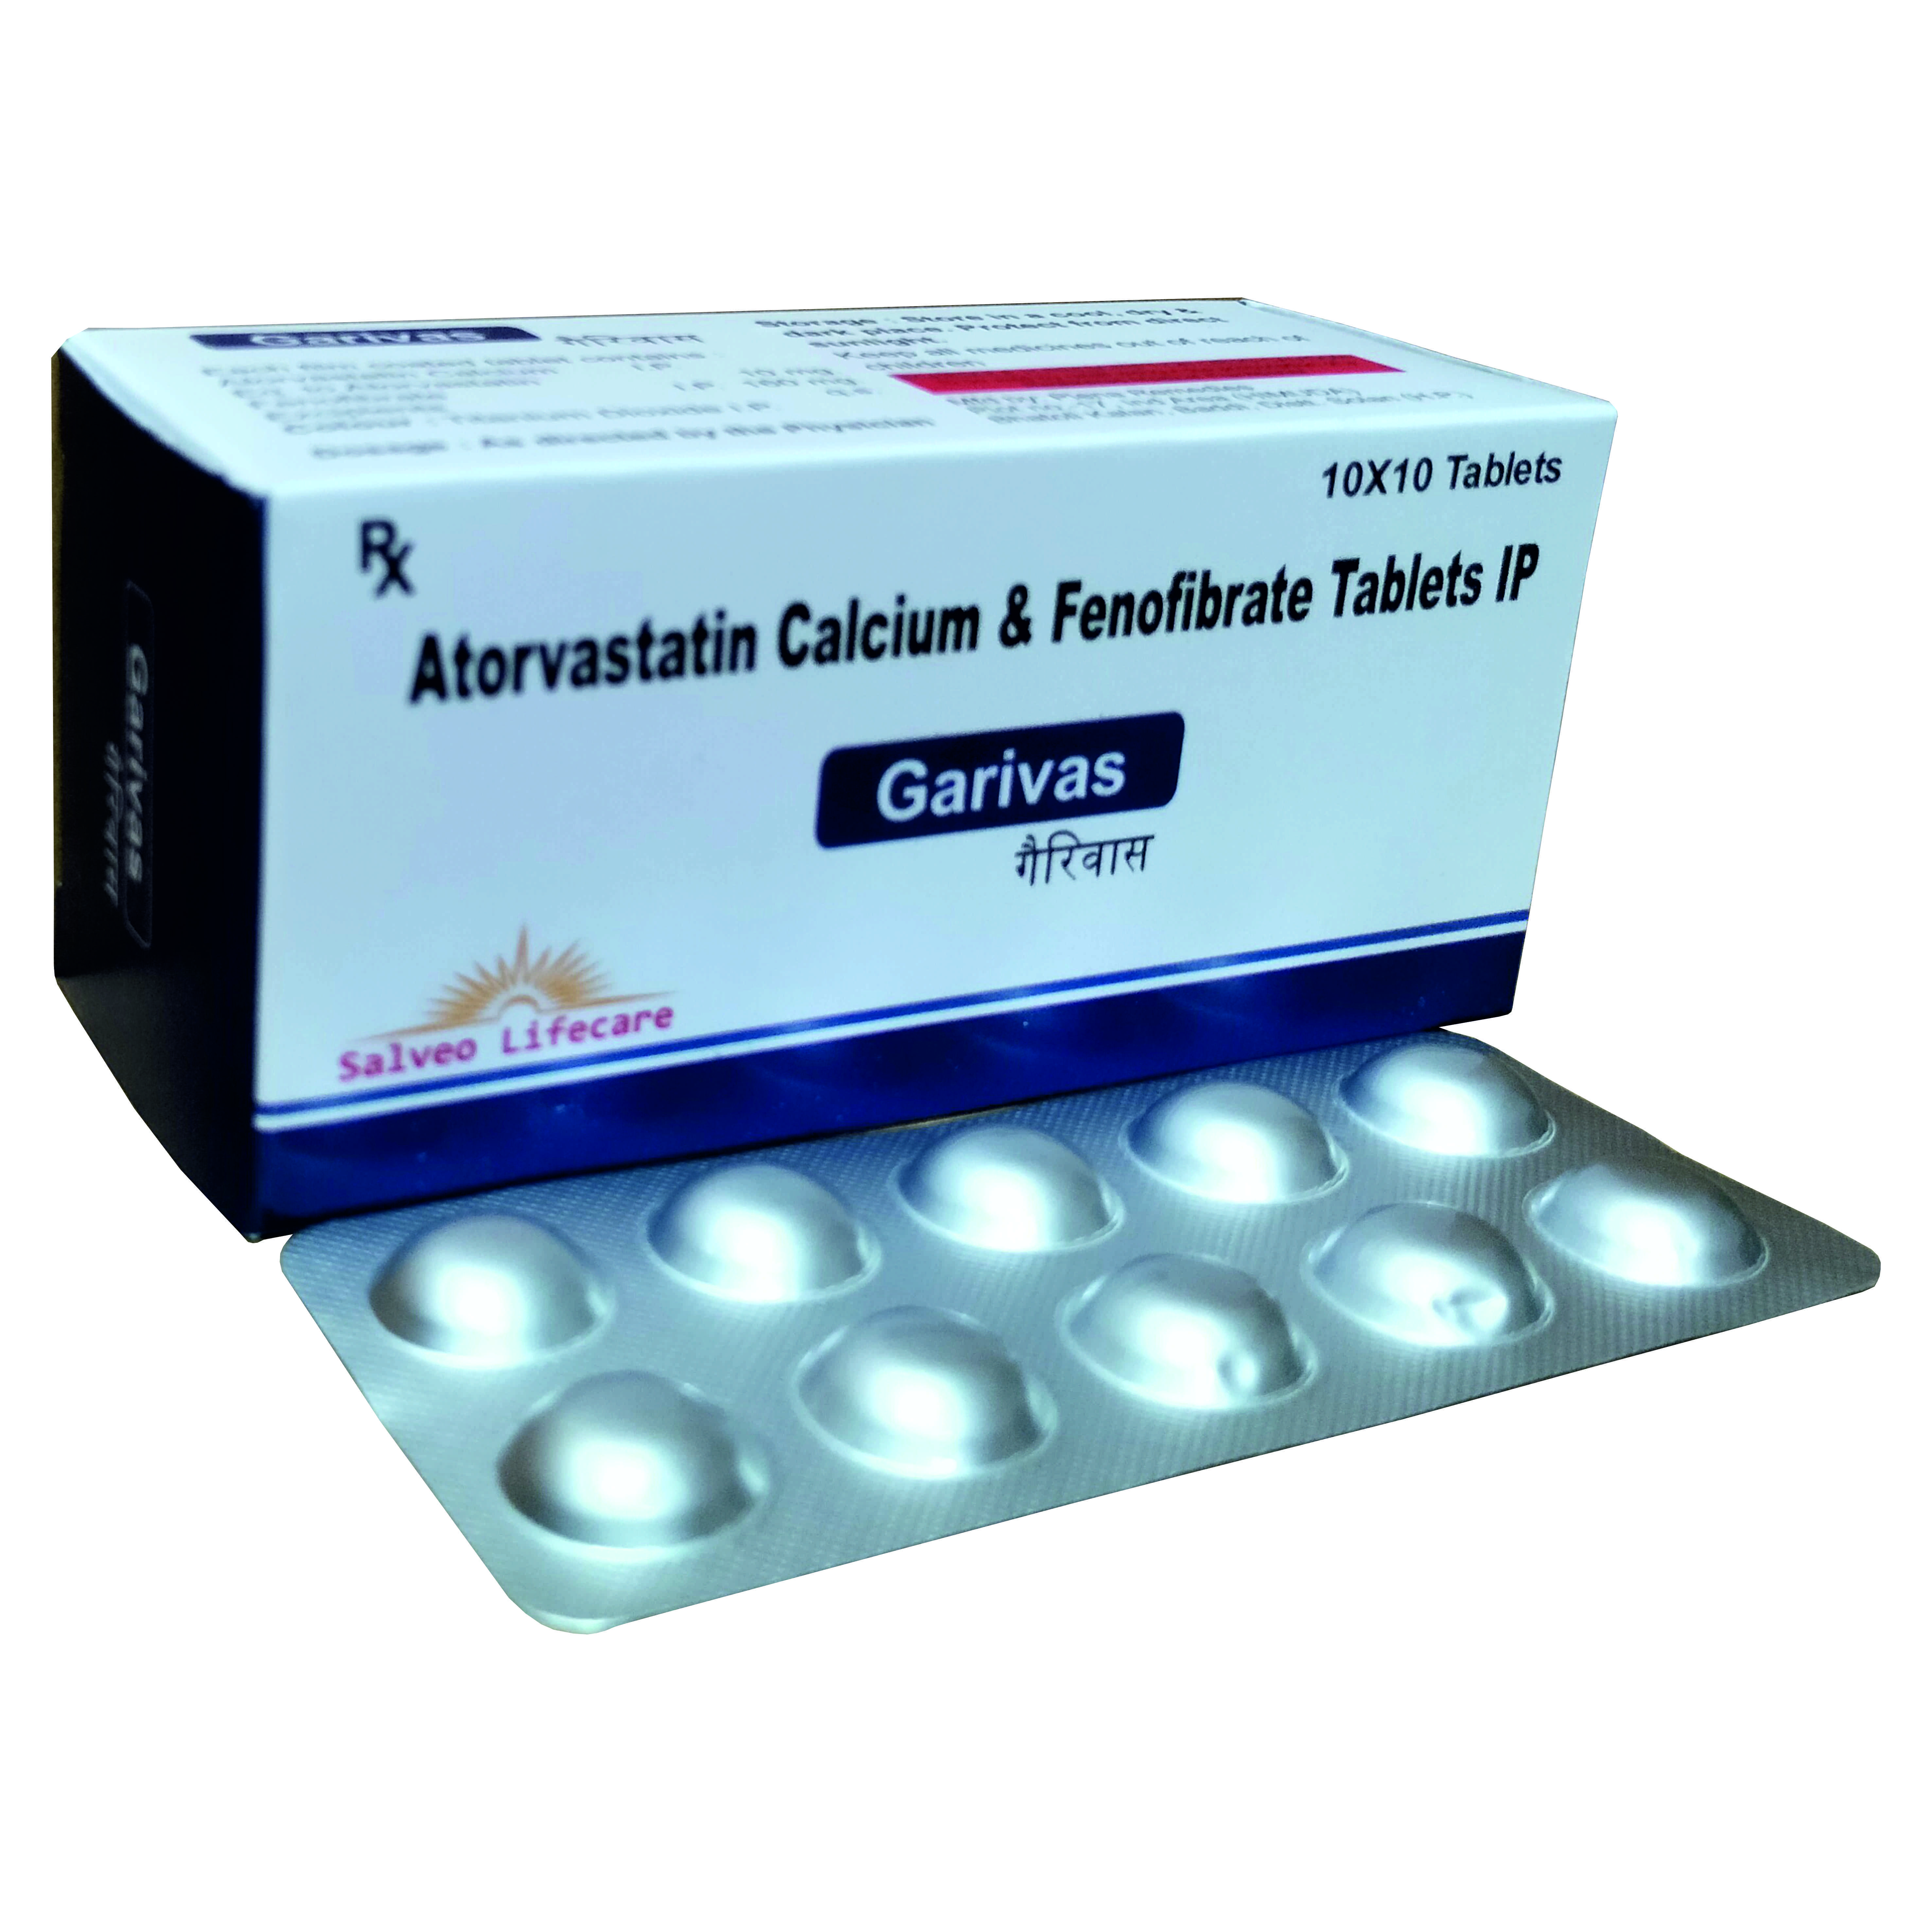 atorvastatin 10 mg fenofibrate 160 mg